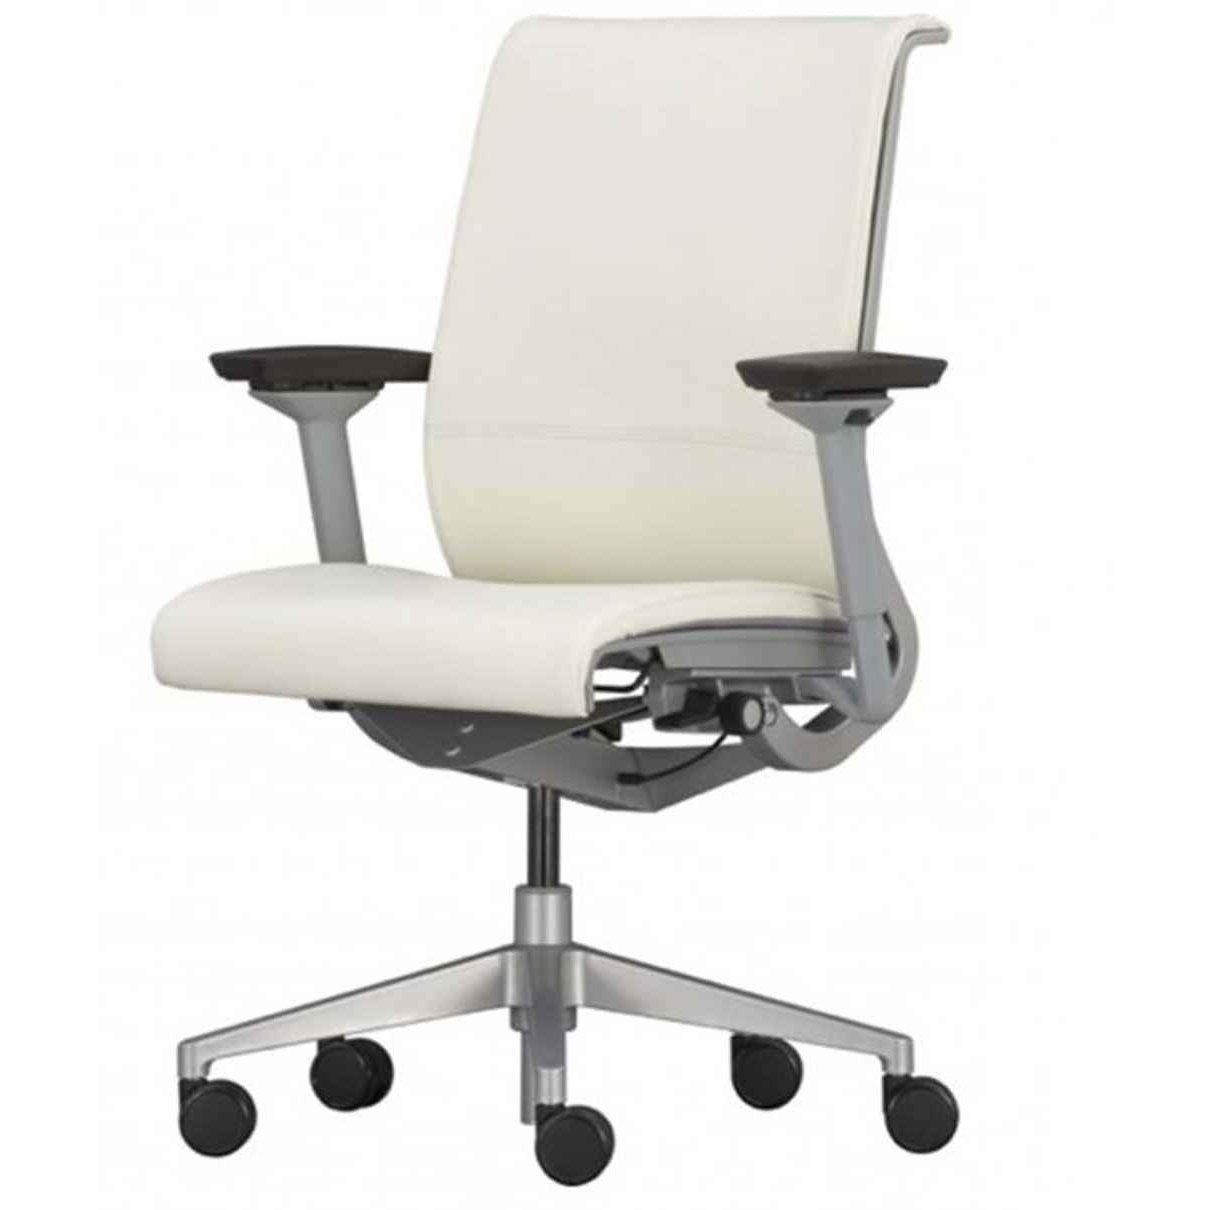 Ergonomic Ultra Modern White Executive Office Chairs